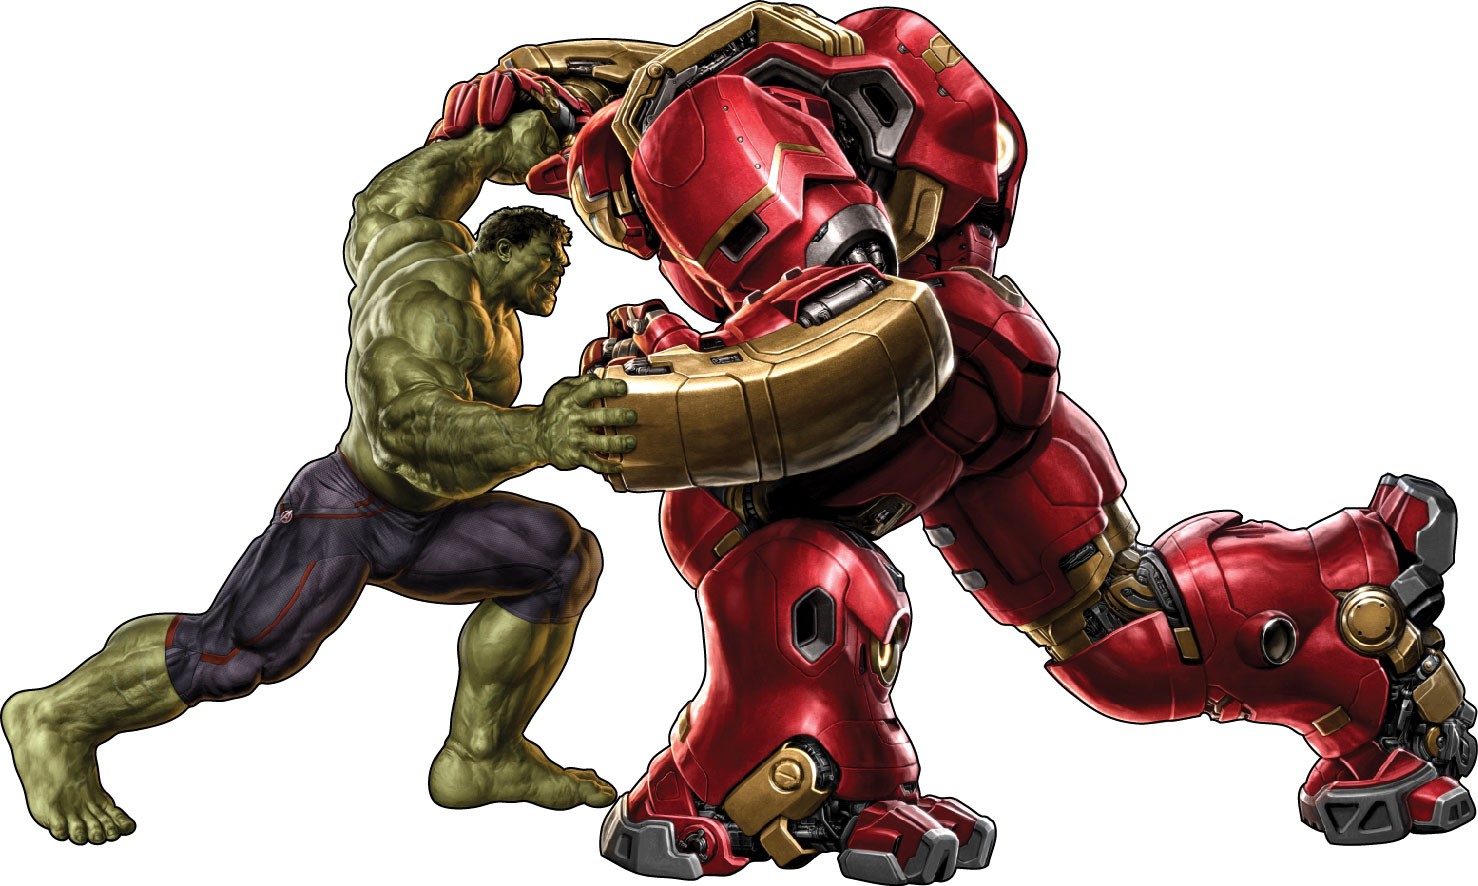 Stickers Hulk Avengers Age Of Ultron 15022 15022